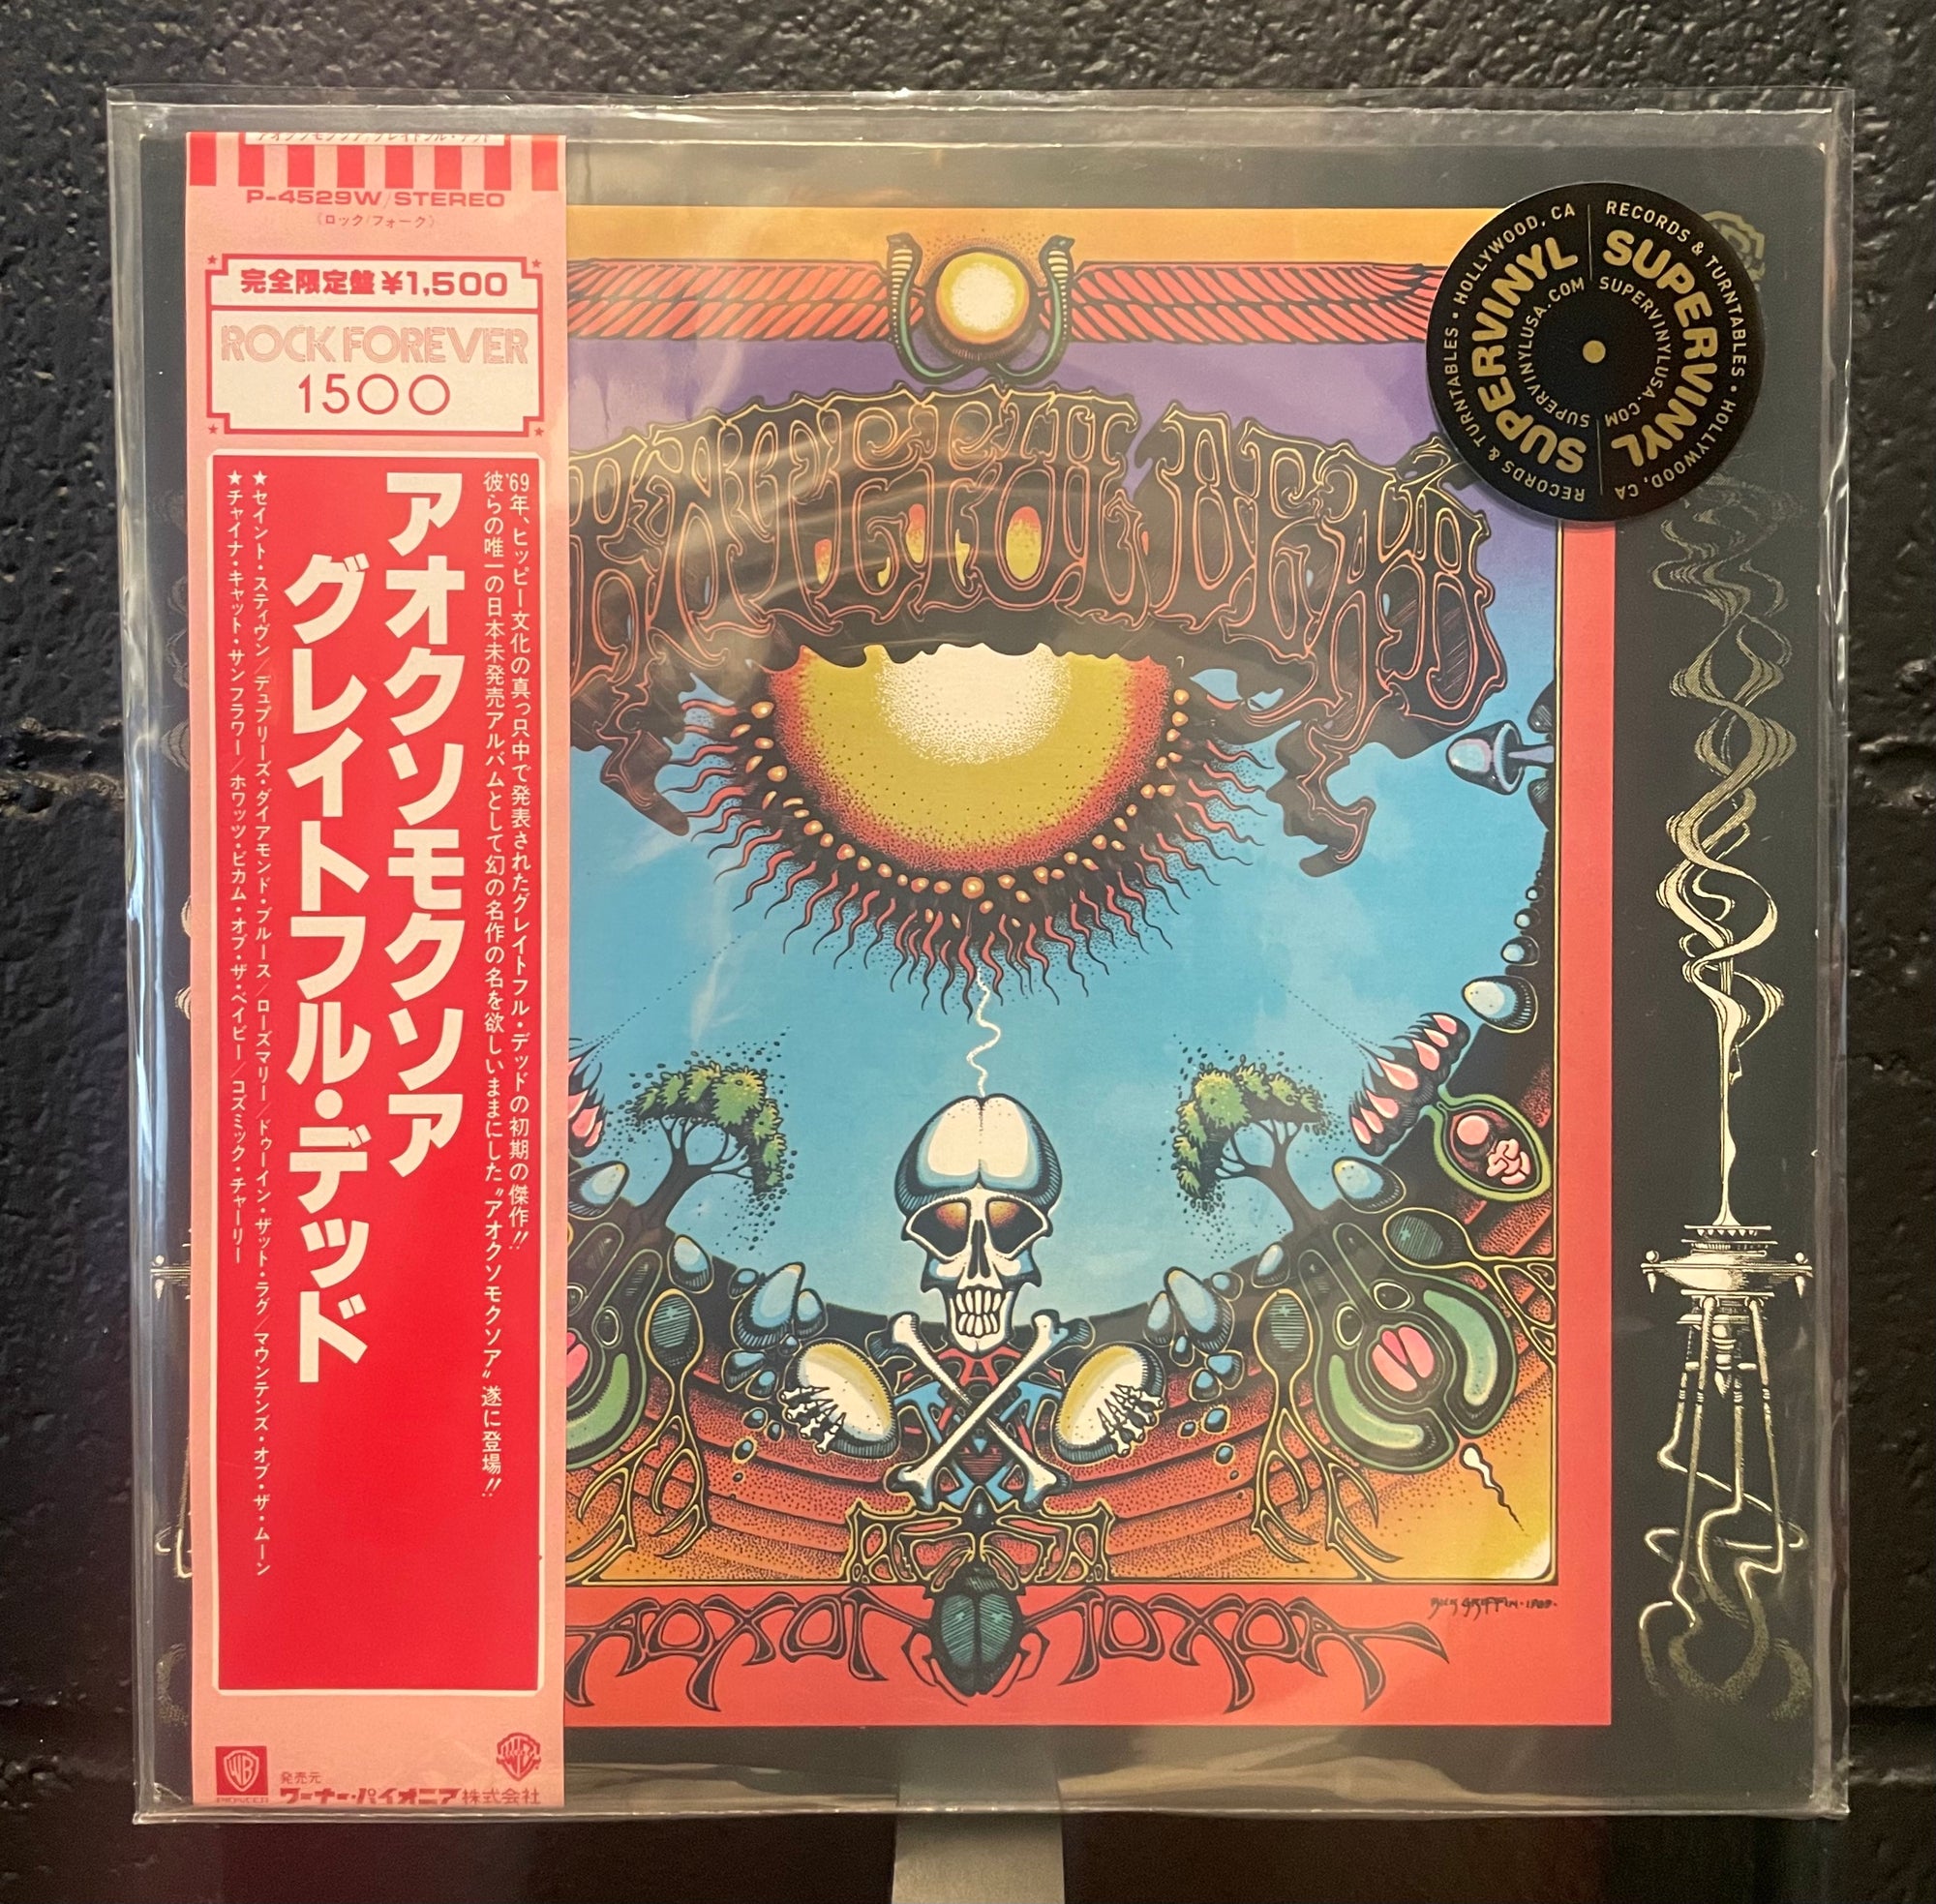 Aoxomoxoa (1980 Japan LP with obi)